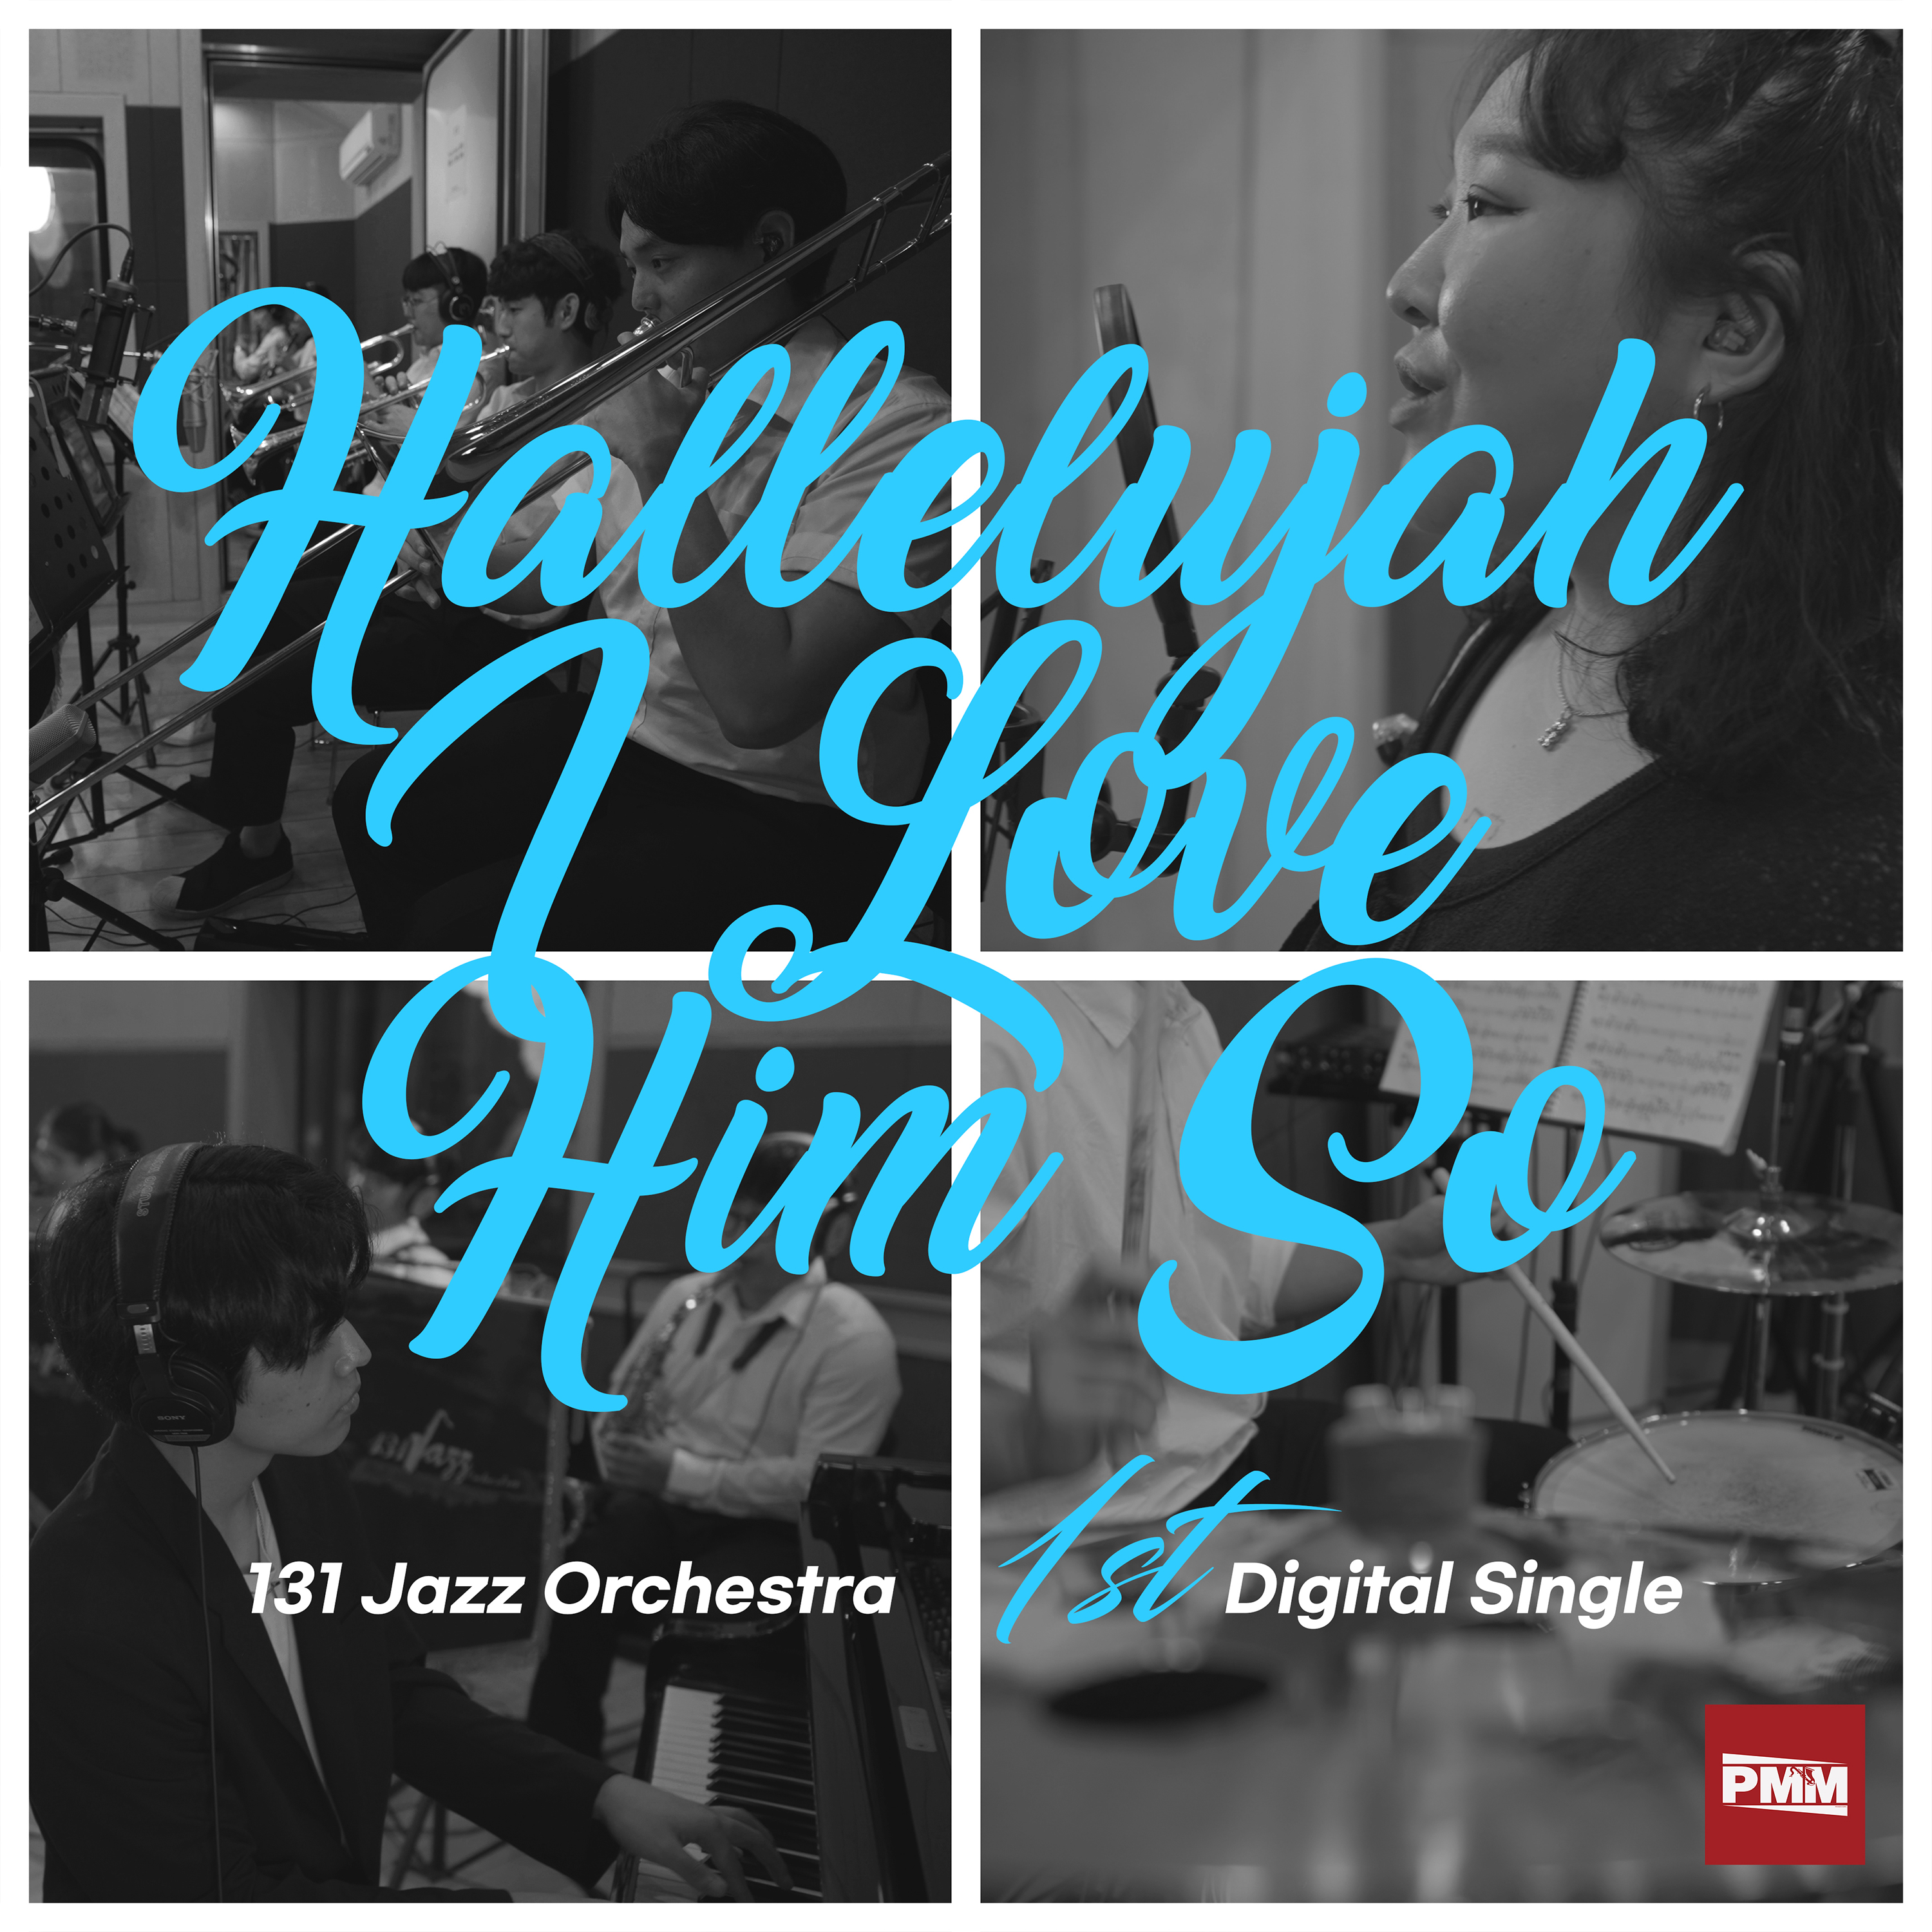 131 Jazz Orchestra 1st Digital Single